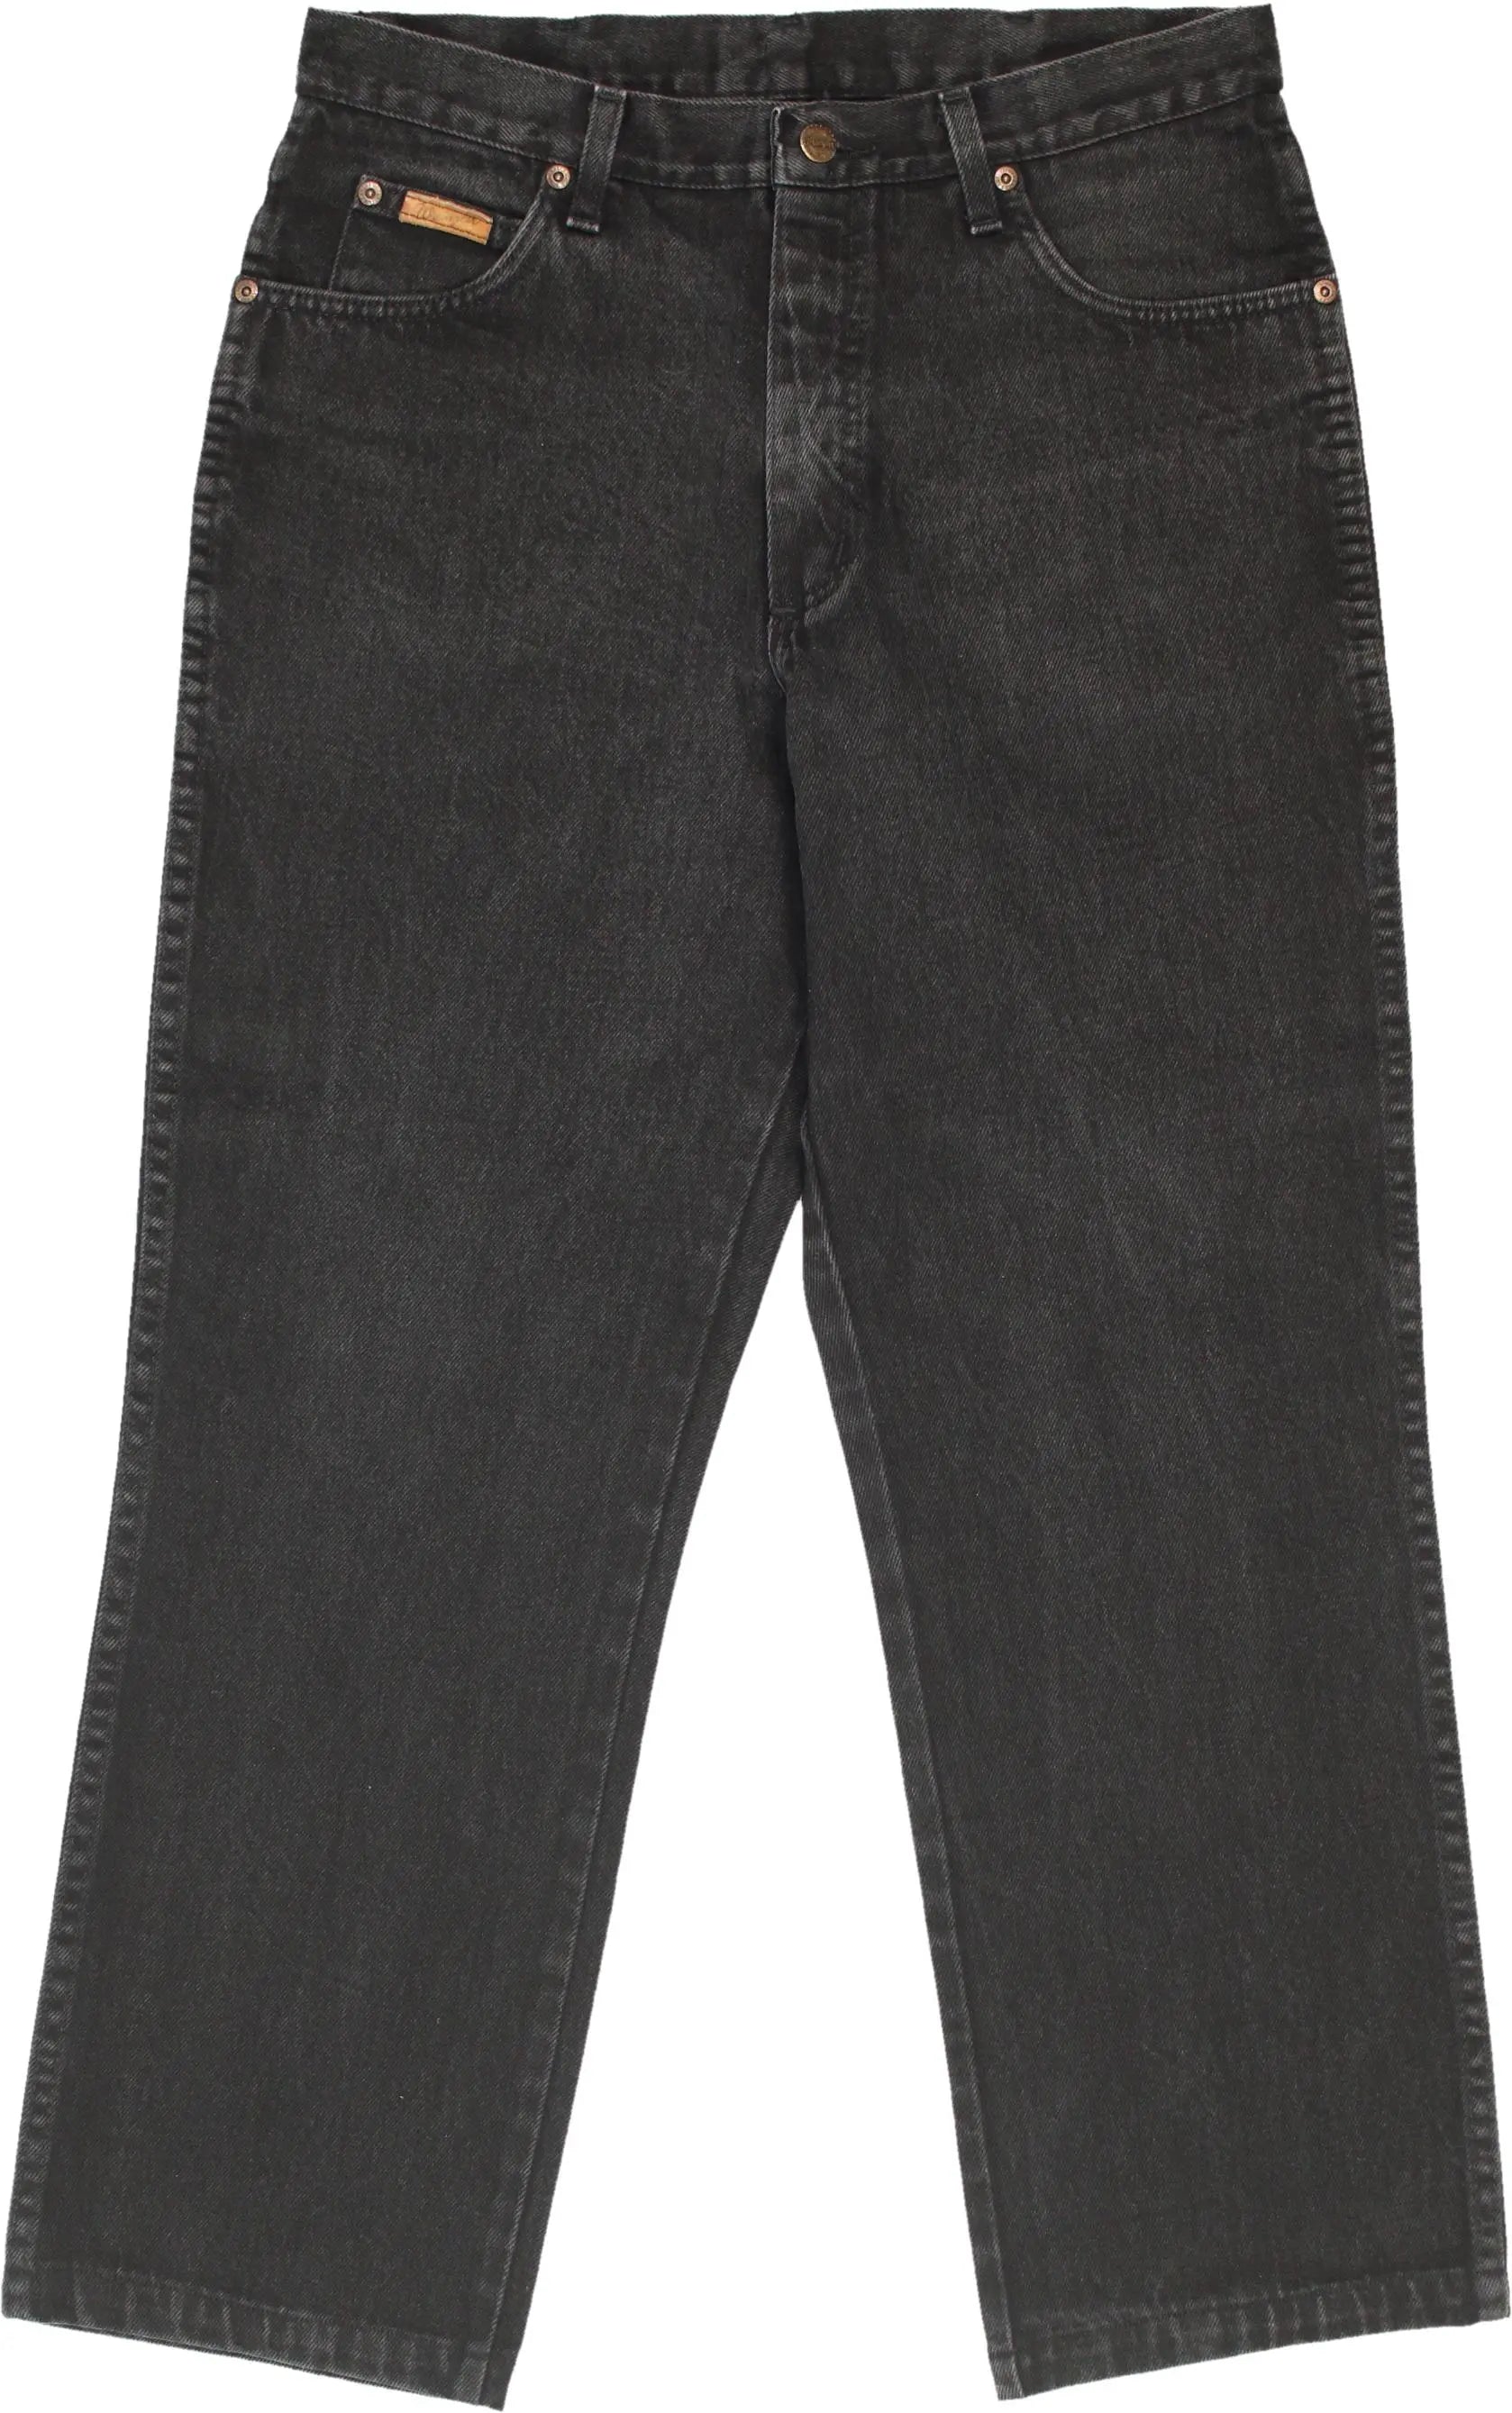 Wrangler - Wrangler Comfort Jeans- ThriftTale.com - Vintage and second handclothing